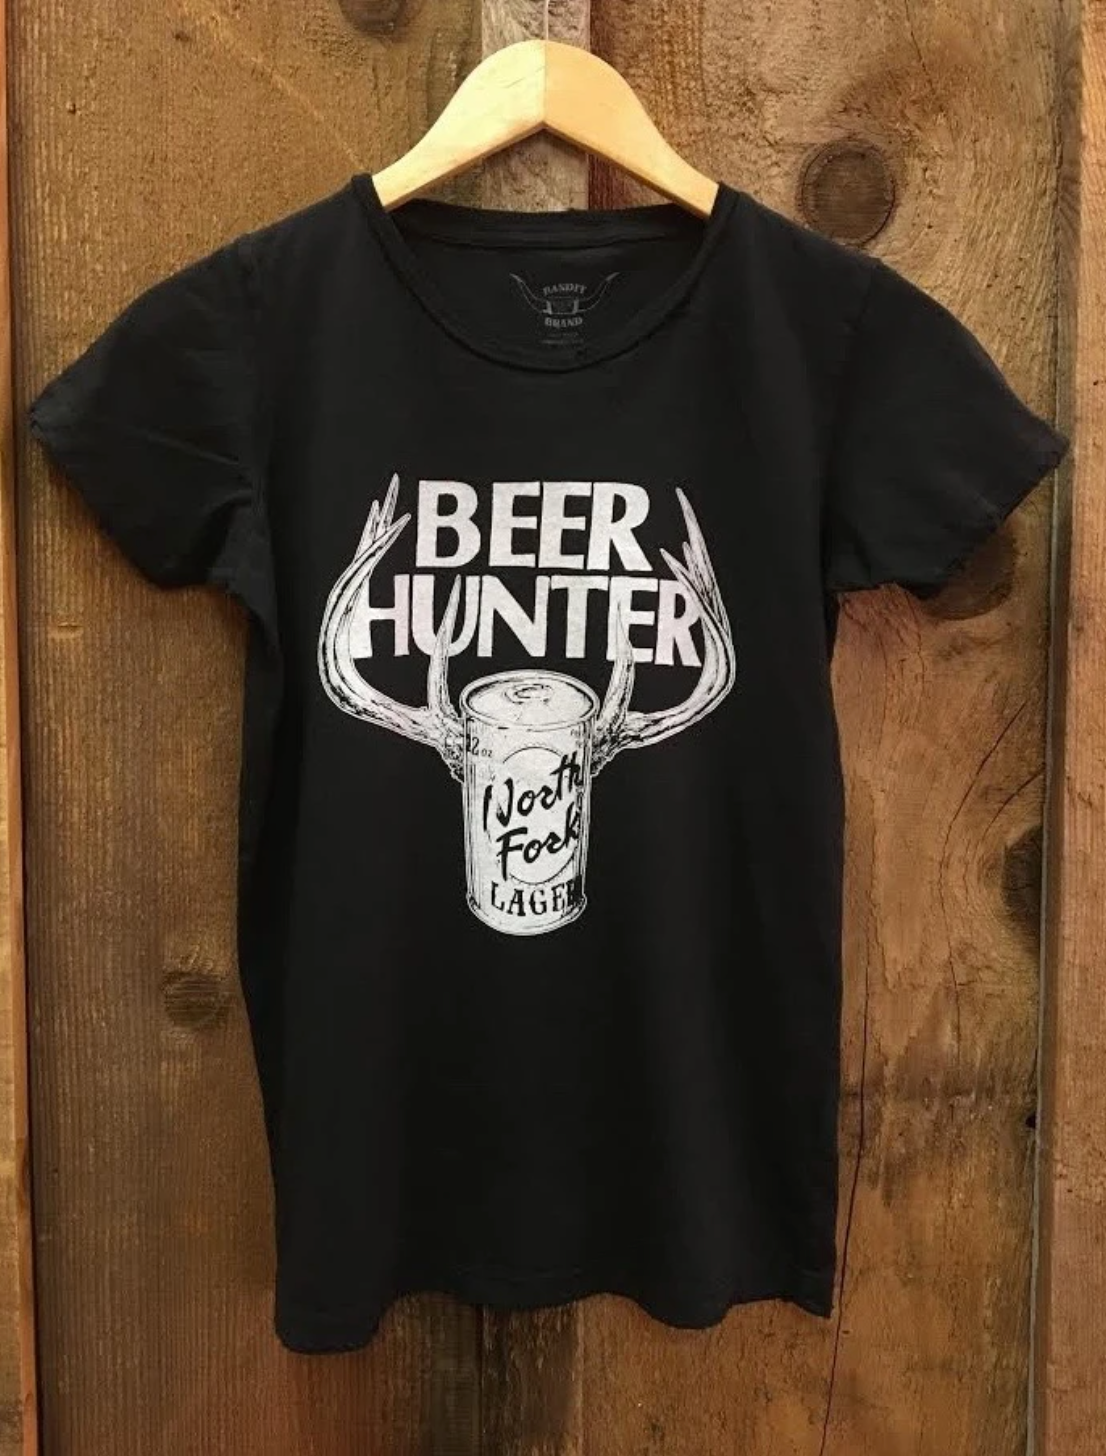 Beer Hunter - shopgypsyweed1969